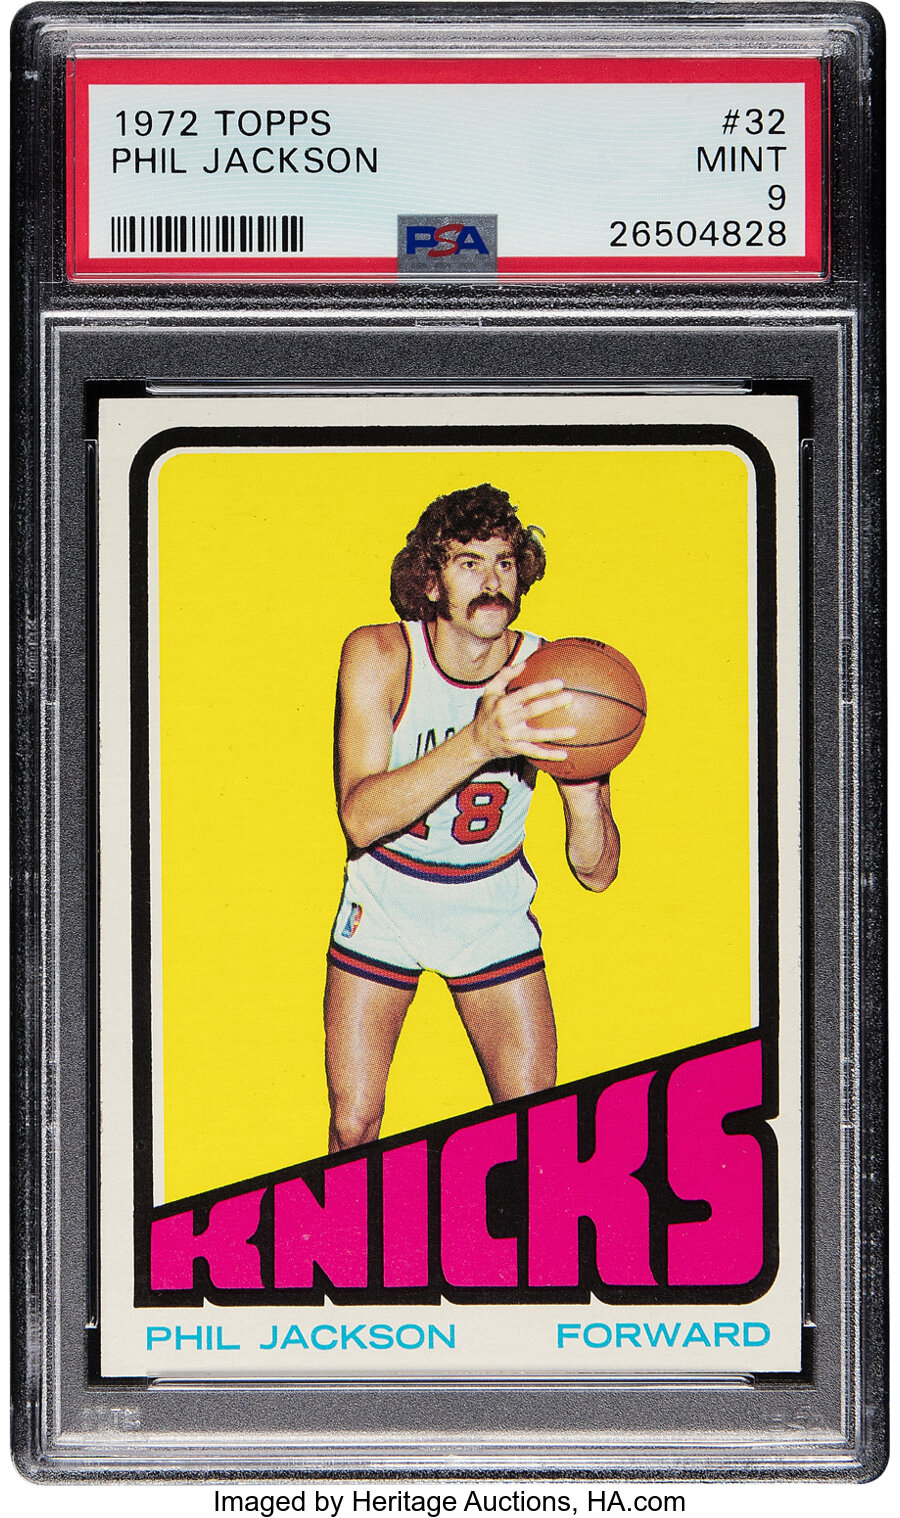 1972 Topps Phil Jackson Rookie #32 PSA Mint 9 - Four Higher